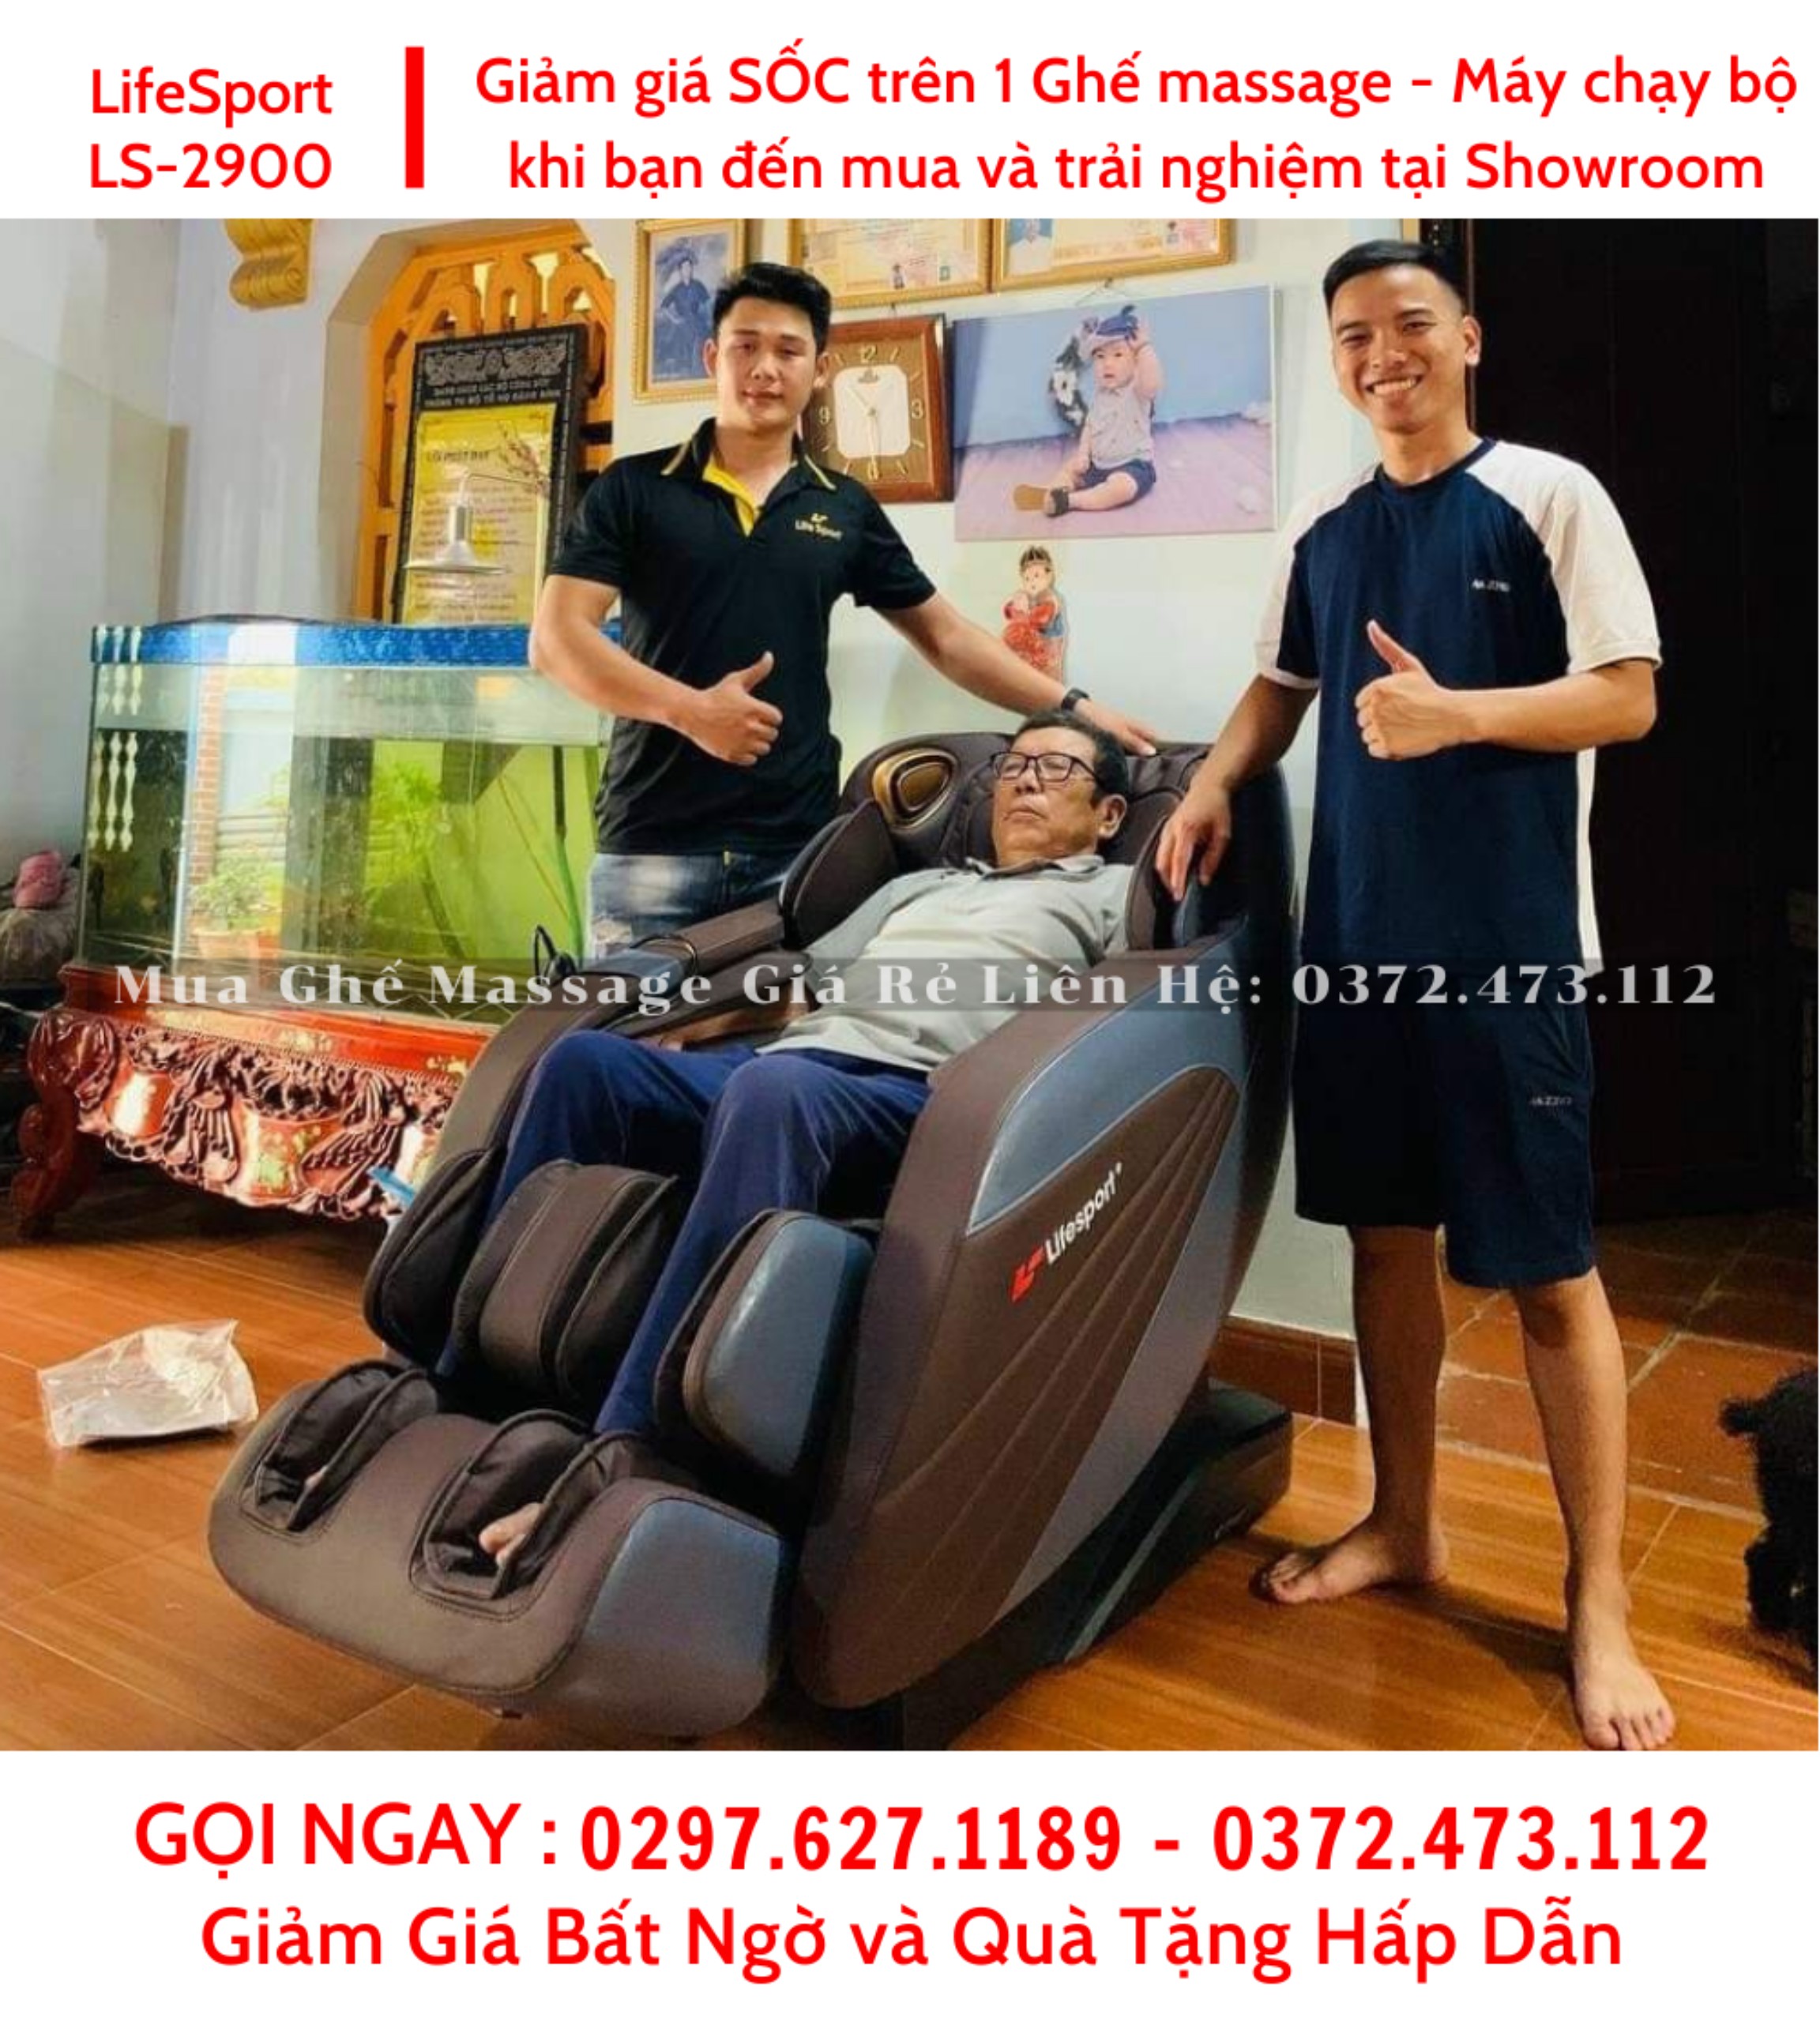 Ghế massage Lifesport LS-2900 giảm giá 60% mua 1 tặng 1